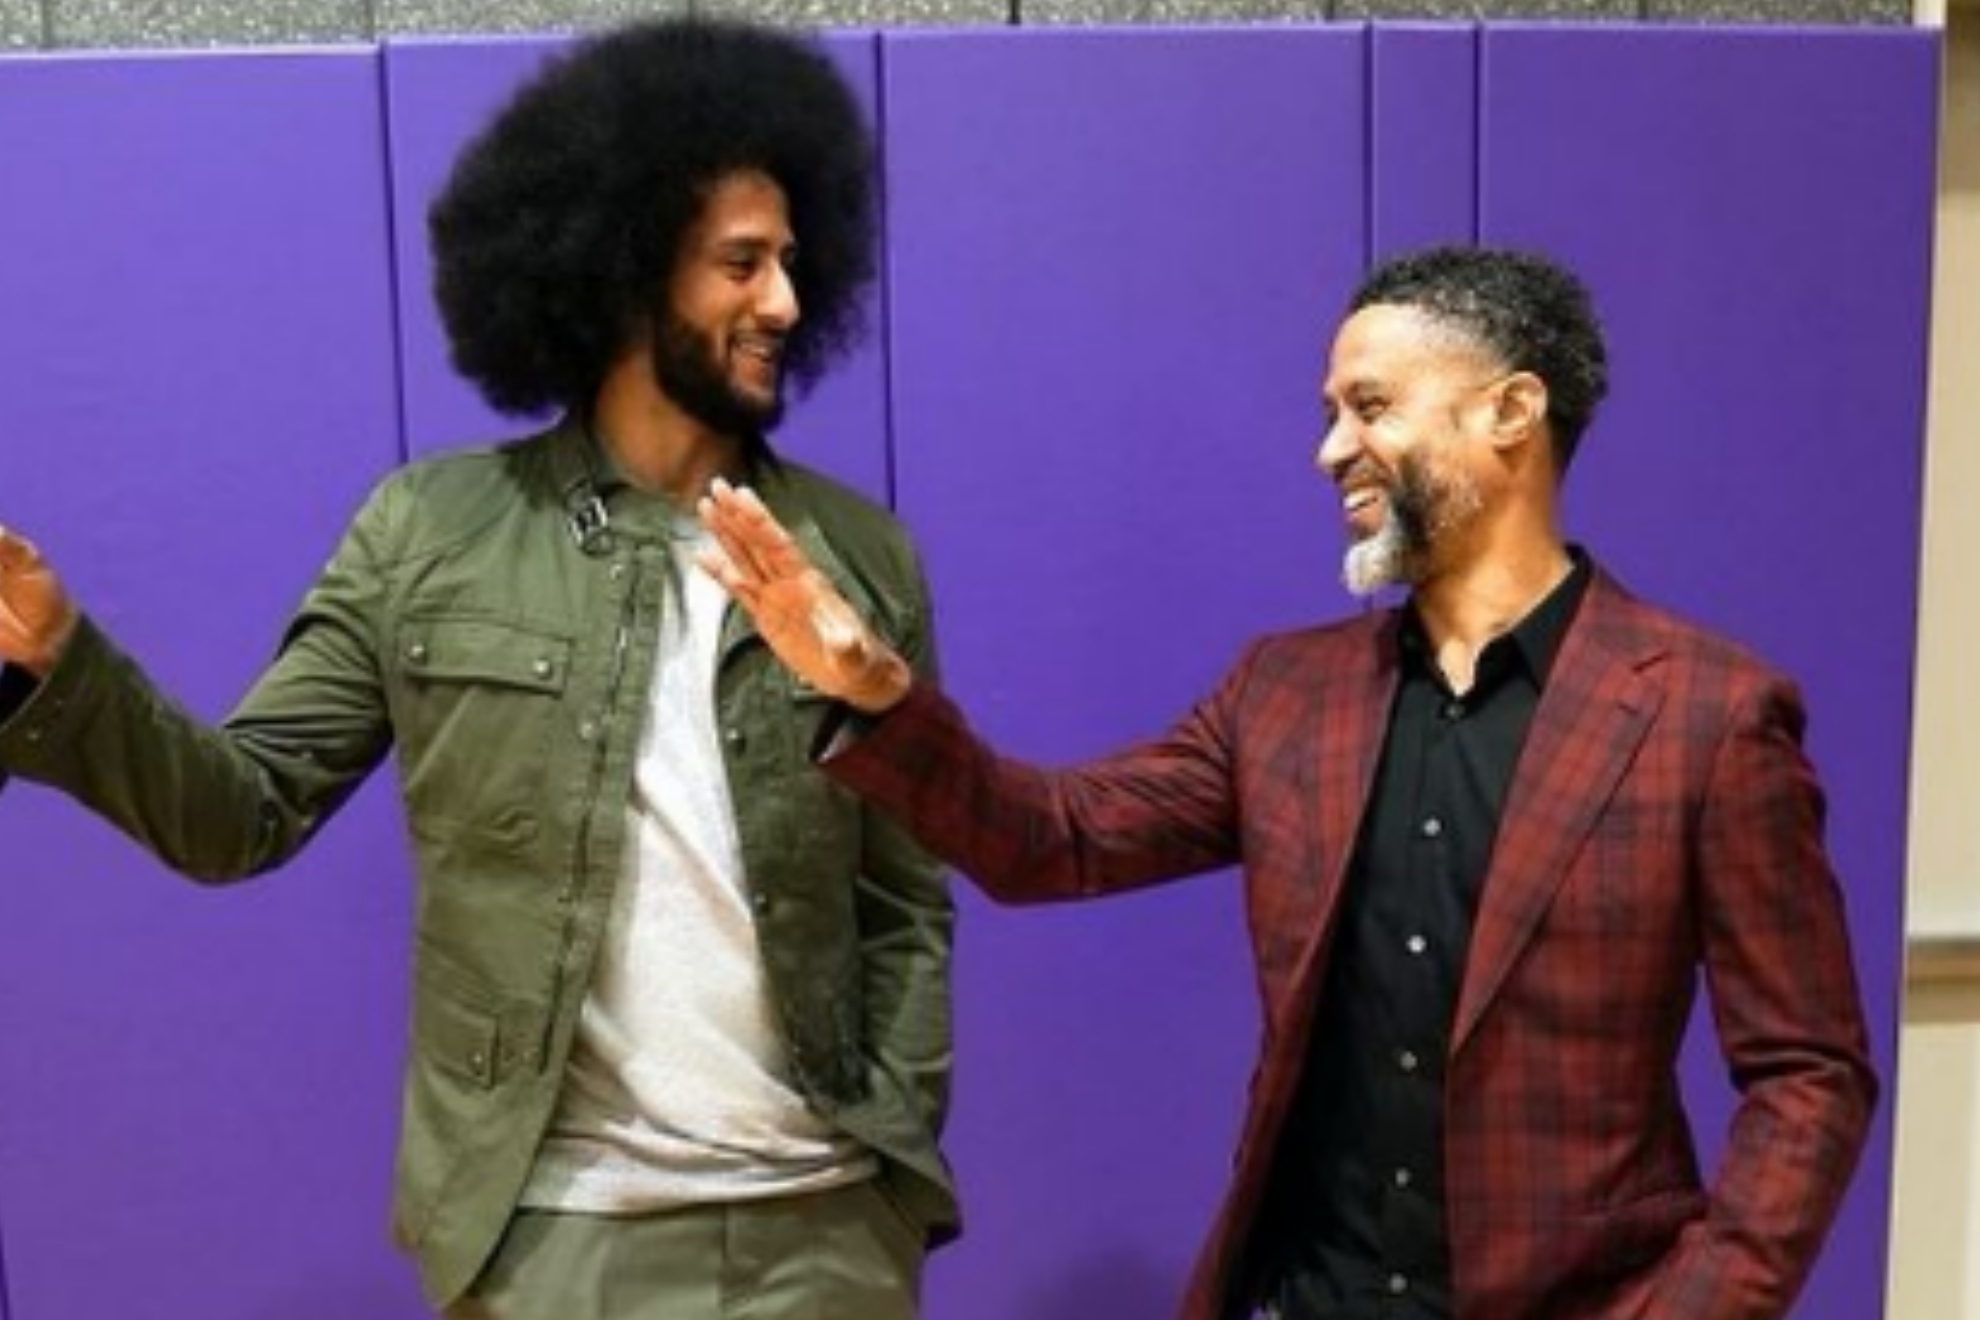 Mahmoud Abdul-Rauf claims Colin Kaepernick felt freer than ever after the National Anthem kneel